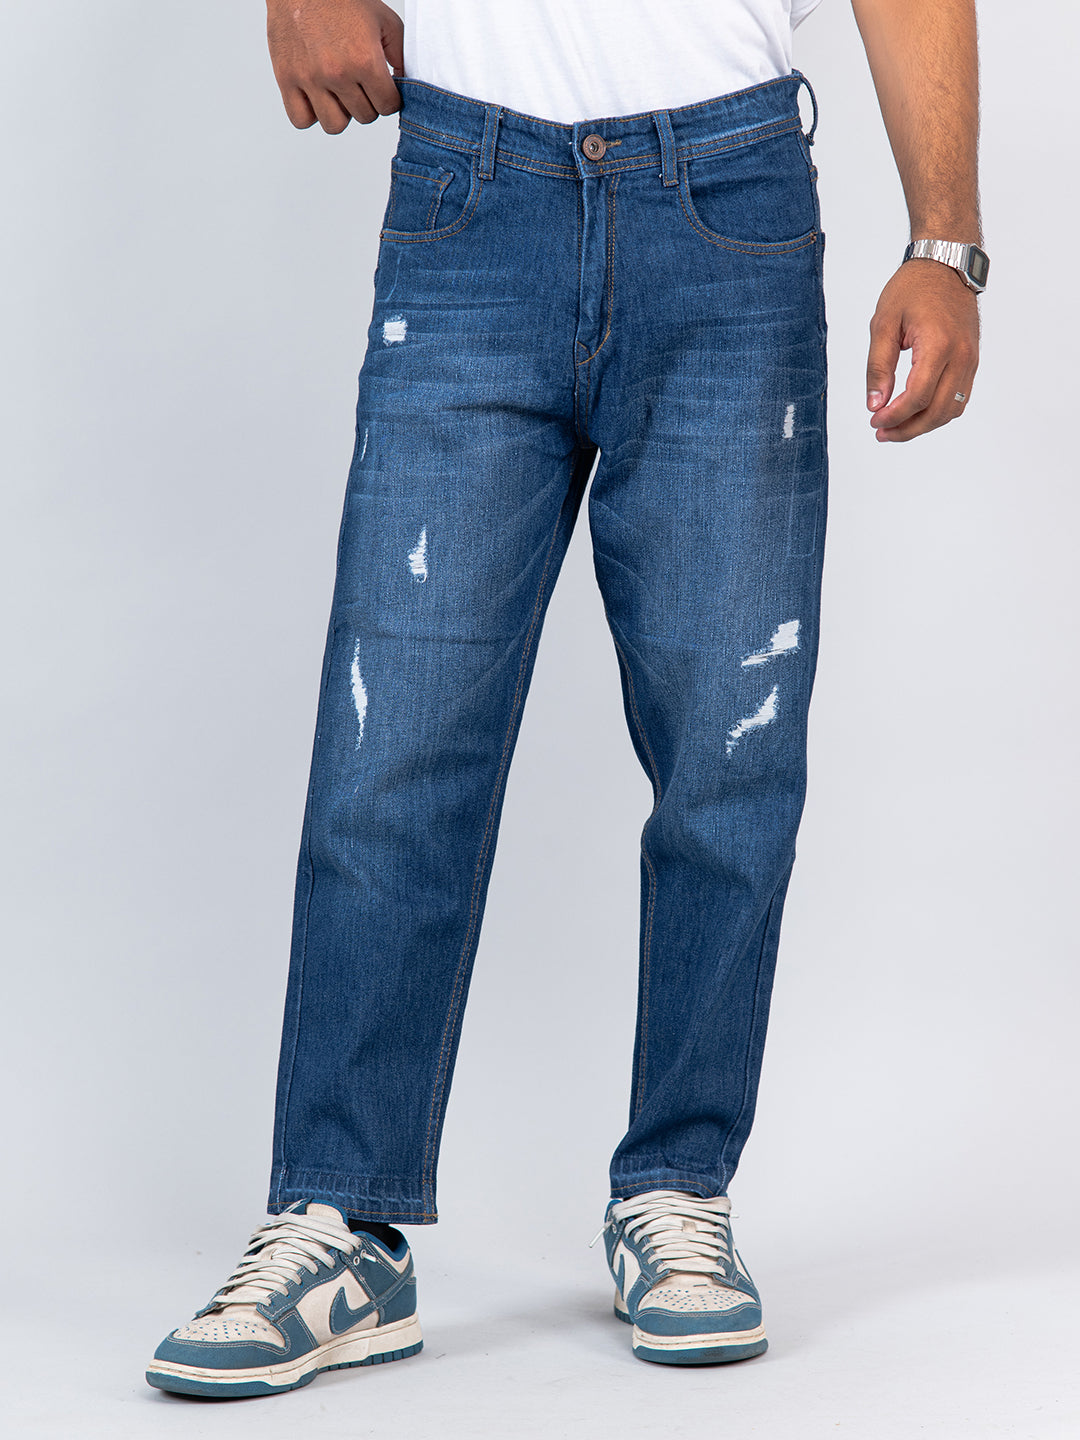 Men jeans jean pants fit types line icons Vector Image